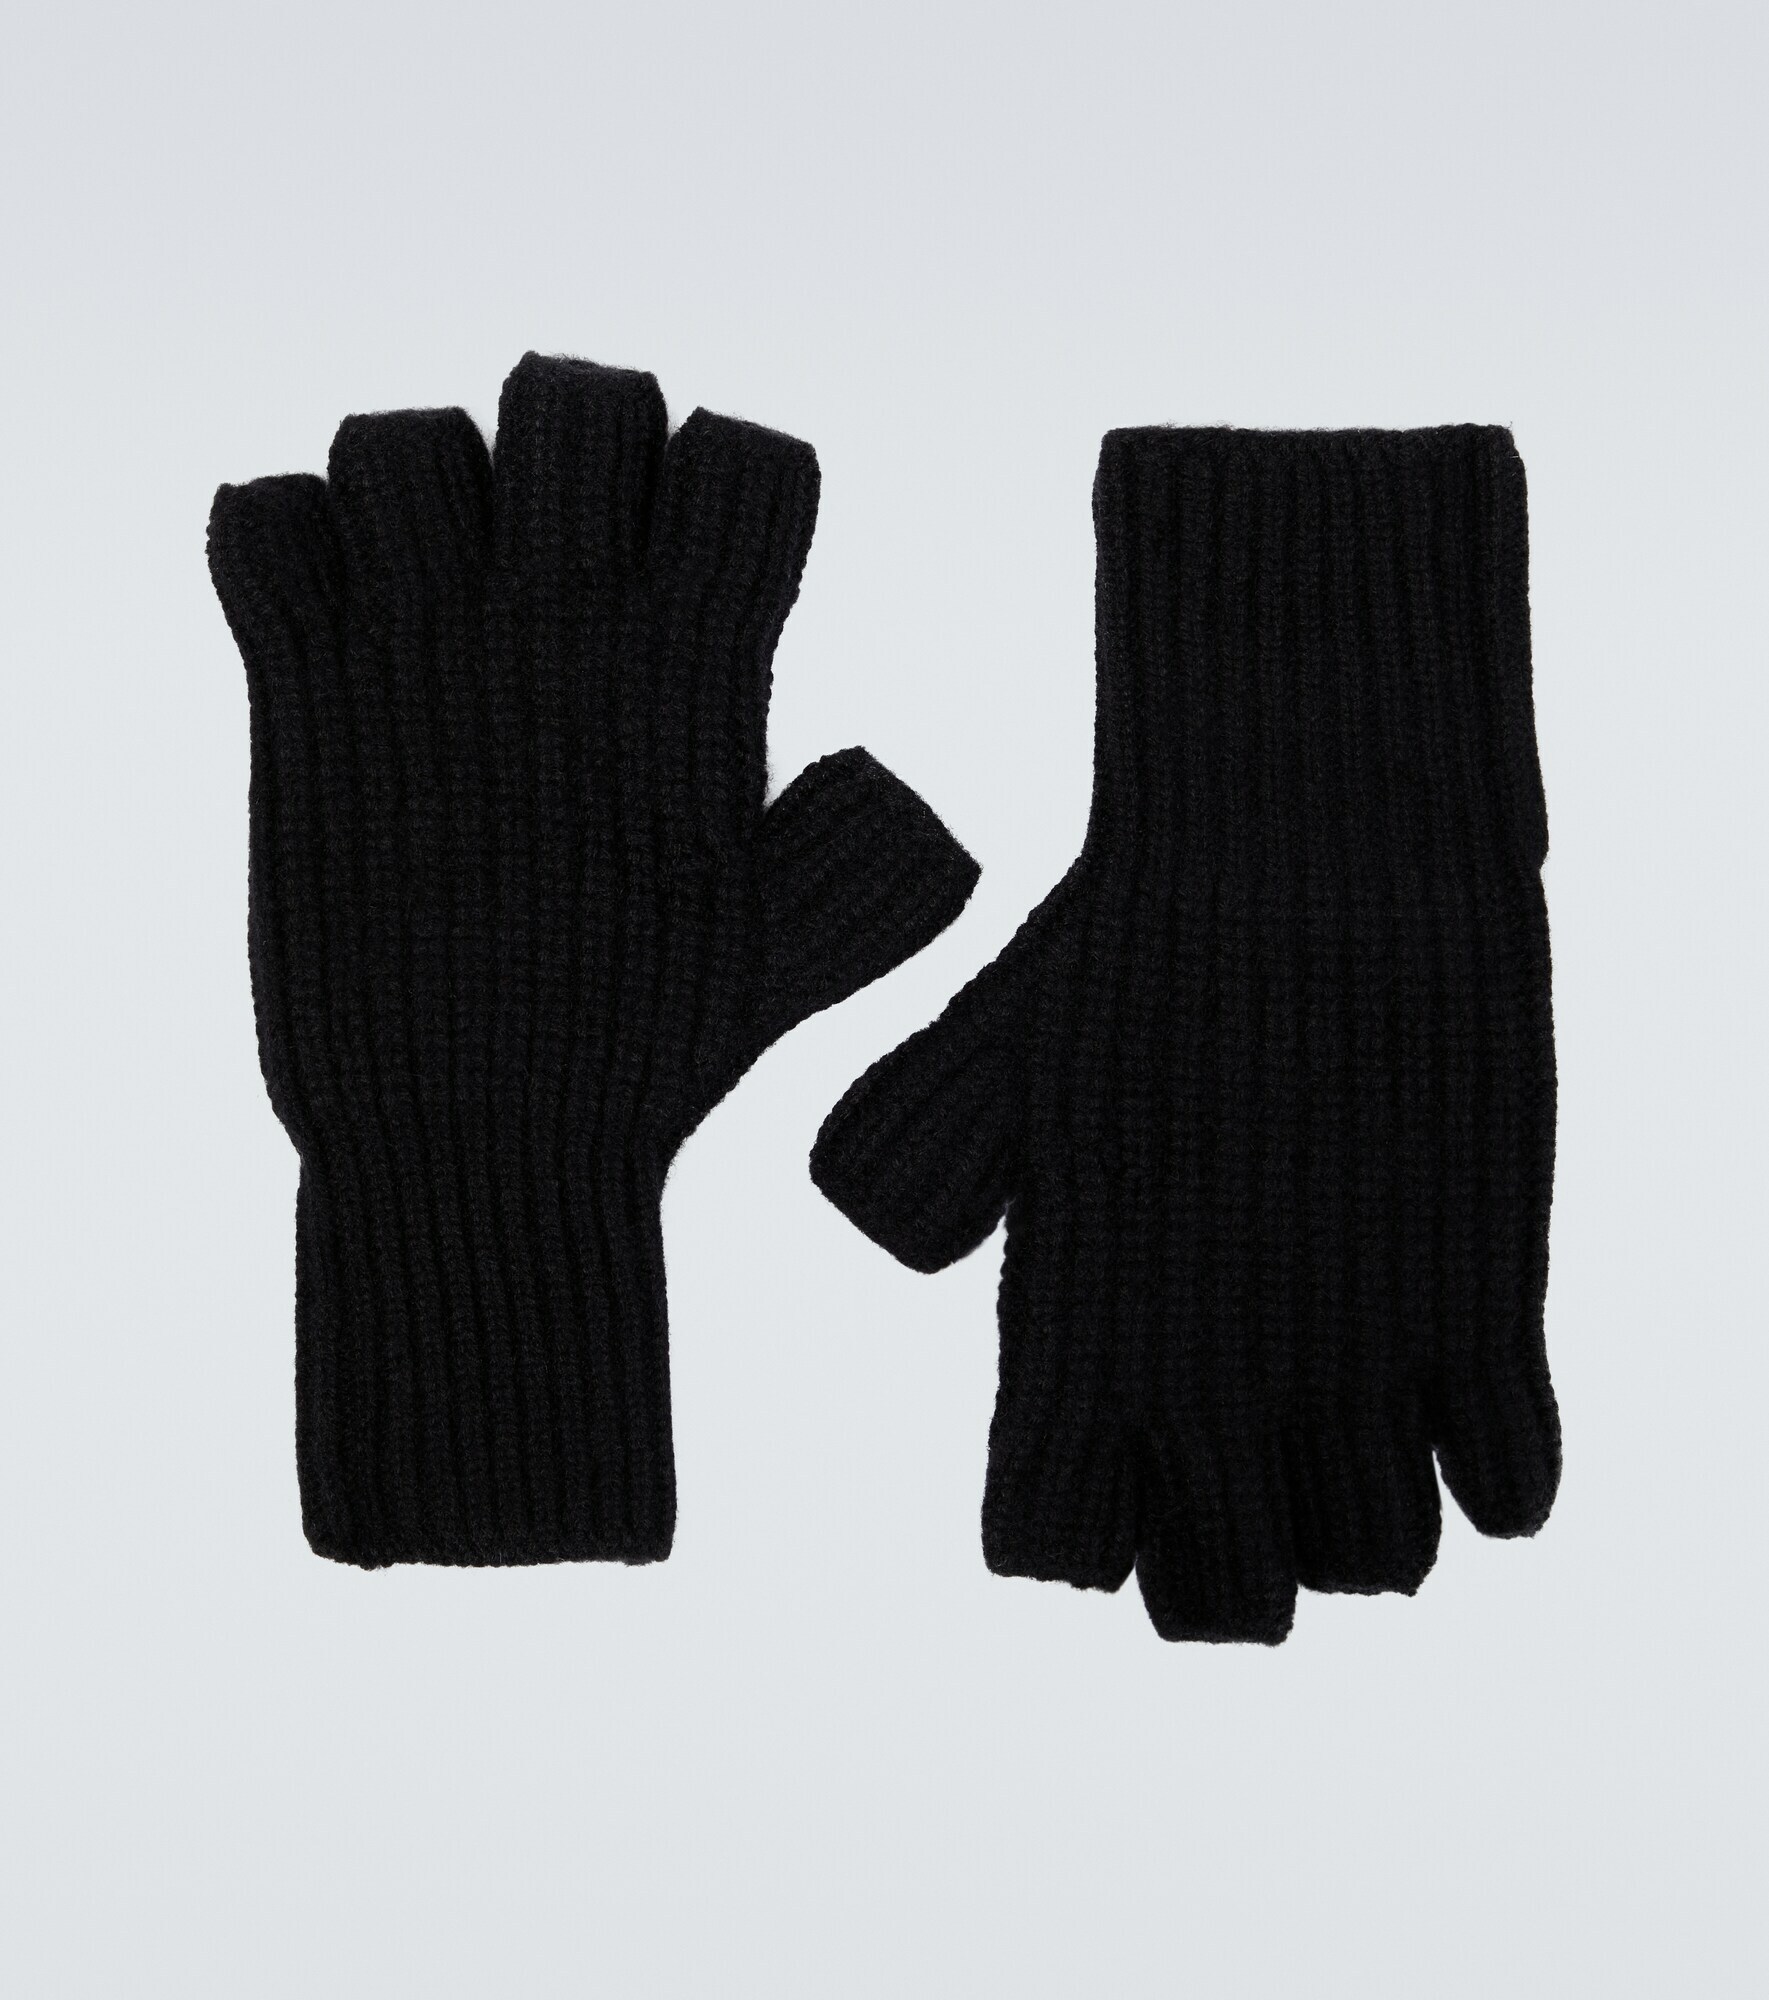 TOM FORD - Cashmere-Lined Leather Gloves - Black TOM FORD